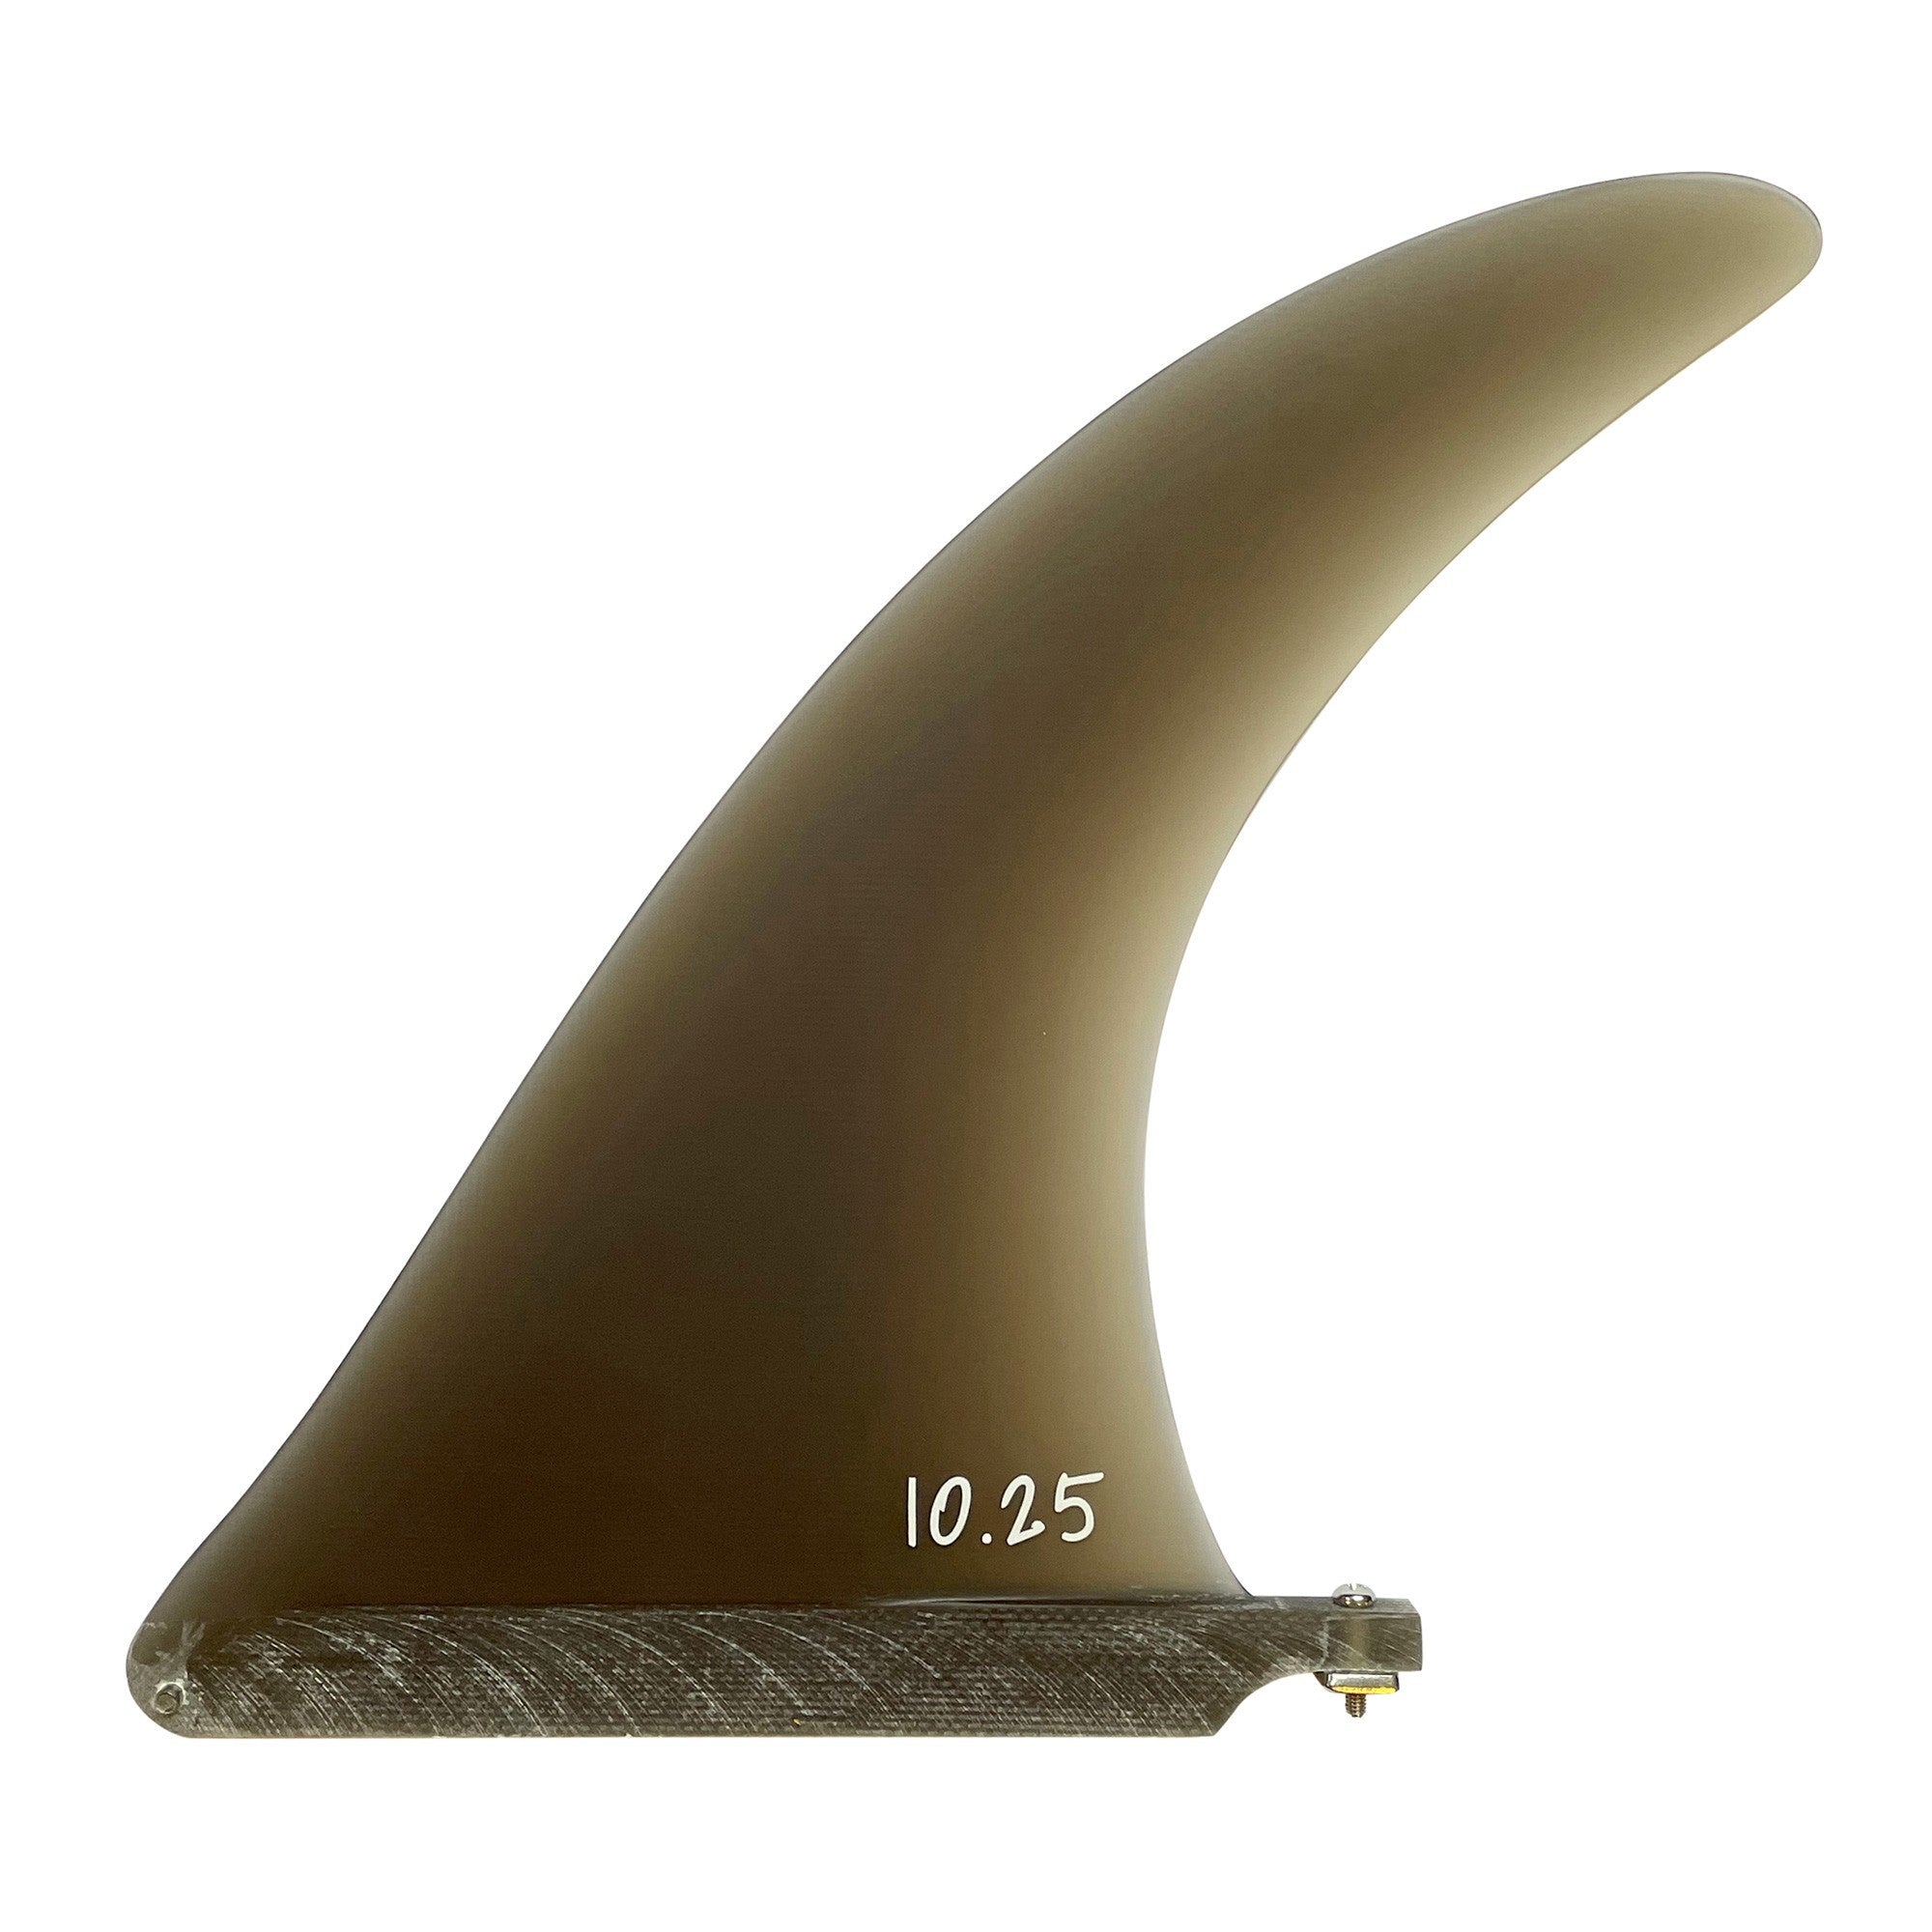 SURF SYSTEM - Dolphin Fiberglass Single Fin (Us Box) - 10.25" - Smoke